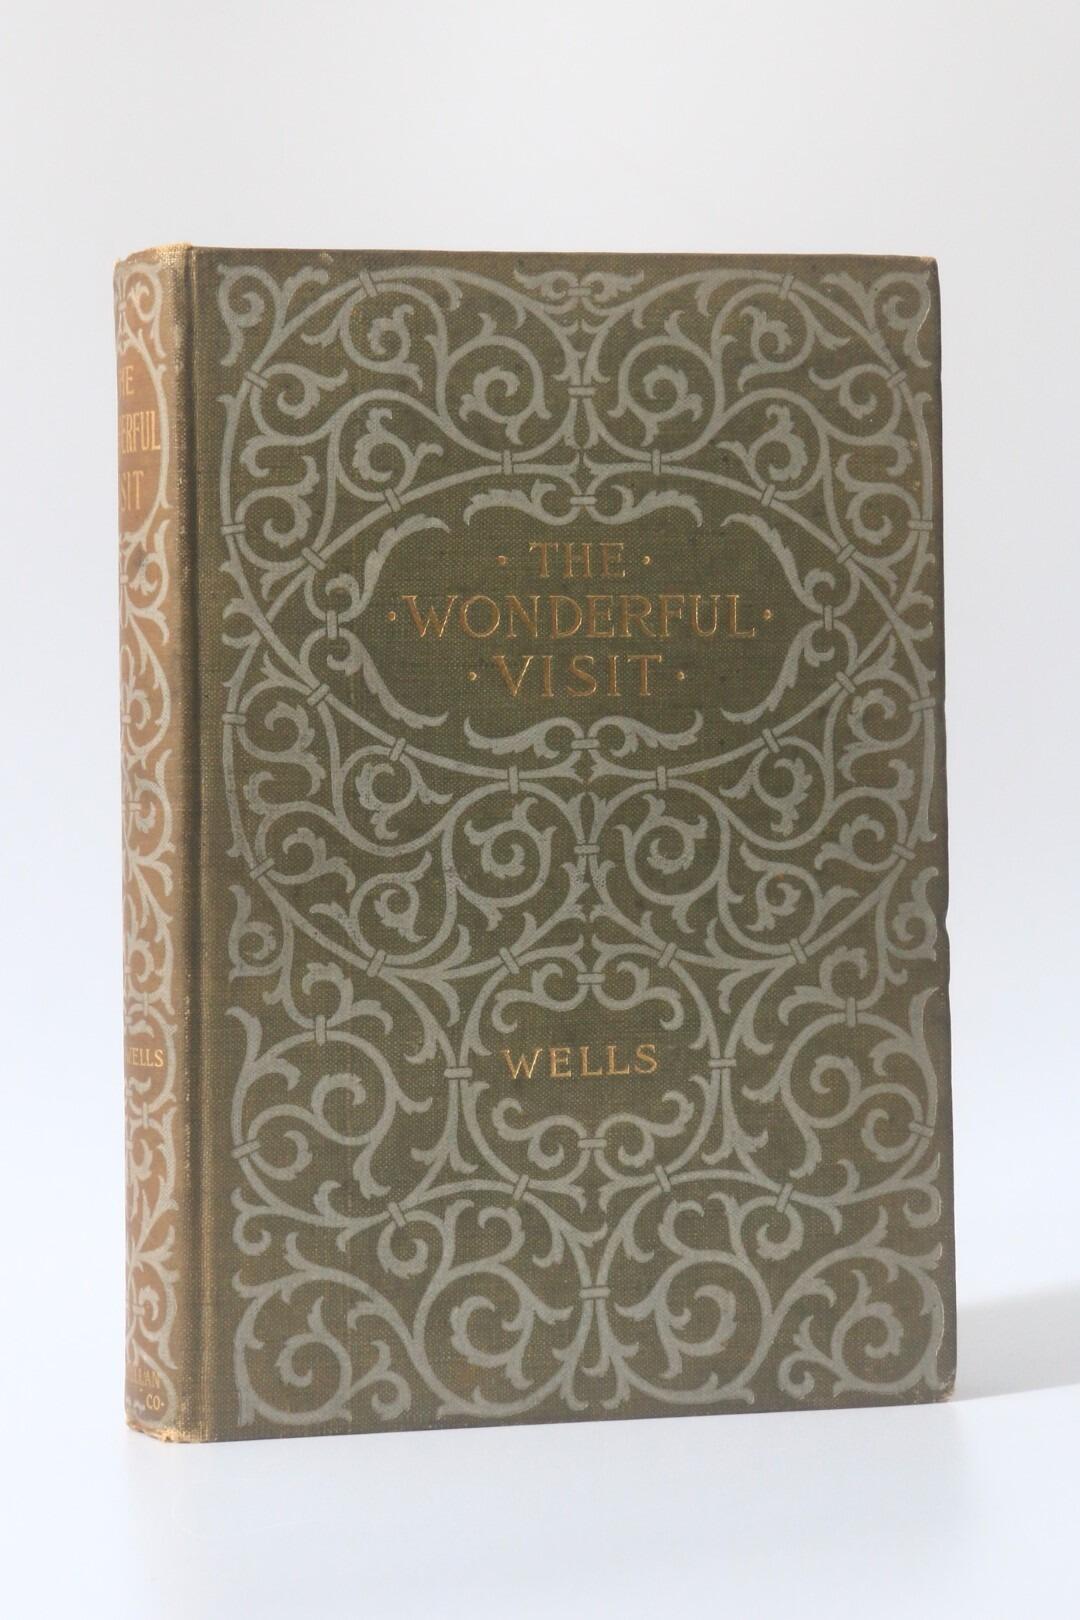 H.G. Wells - The Wonderful Visit - MacMillan, 1895, First Edition.